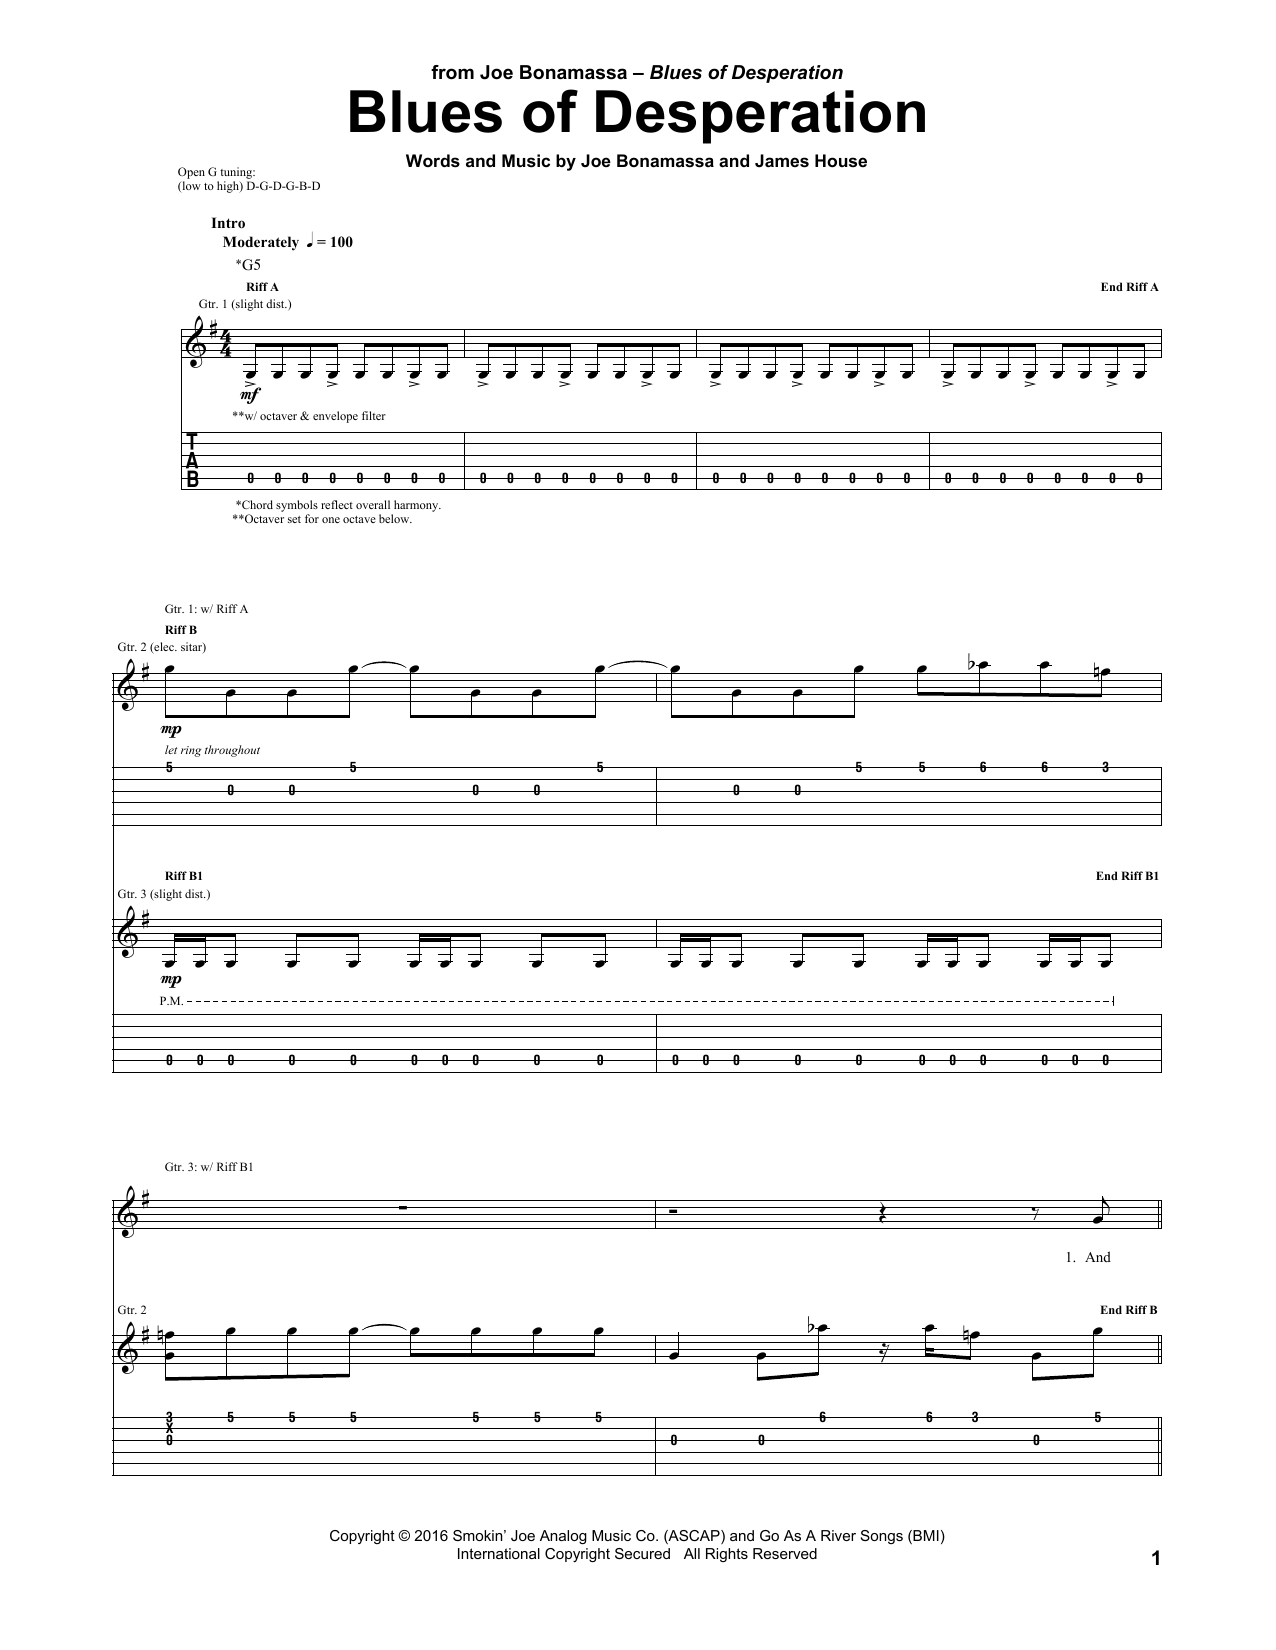 Download Joe Bonamassa Blues Of Desperation Sheet Music and learn how to play Guitar Tab PDF digital score in minutes